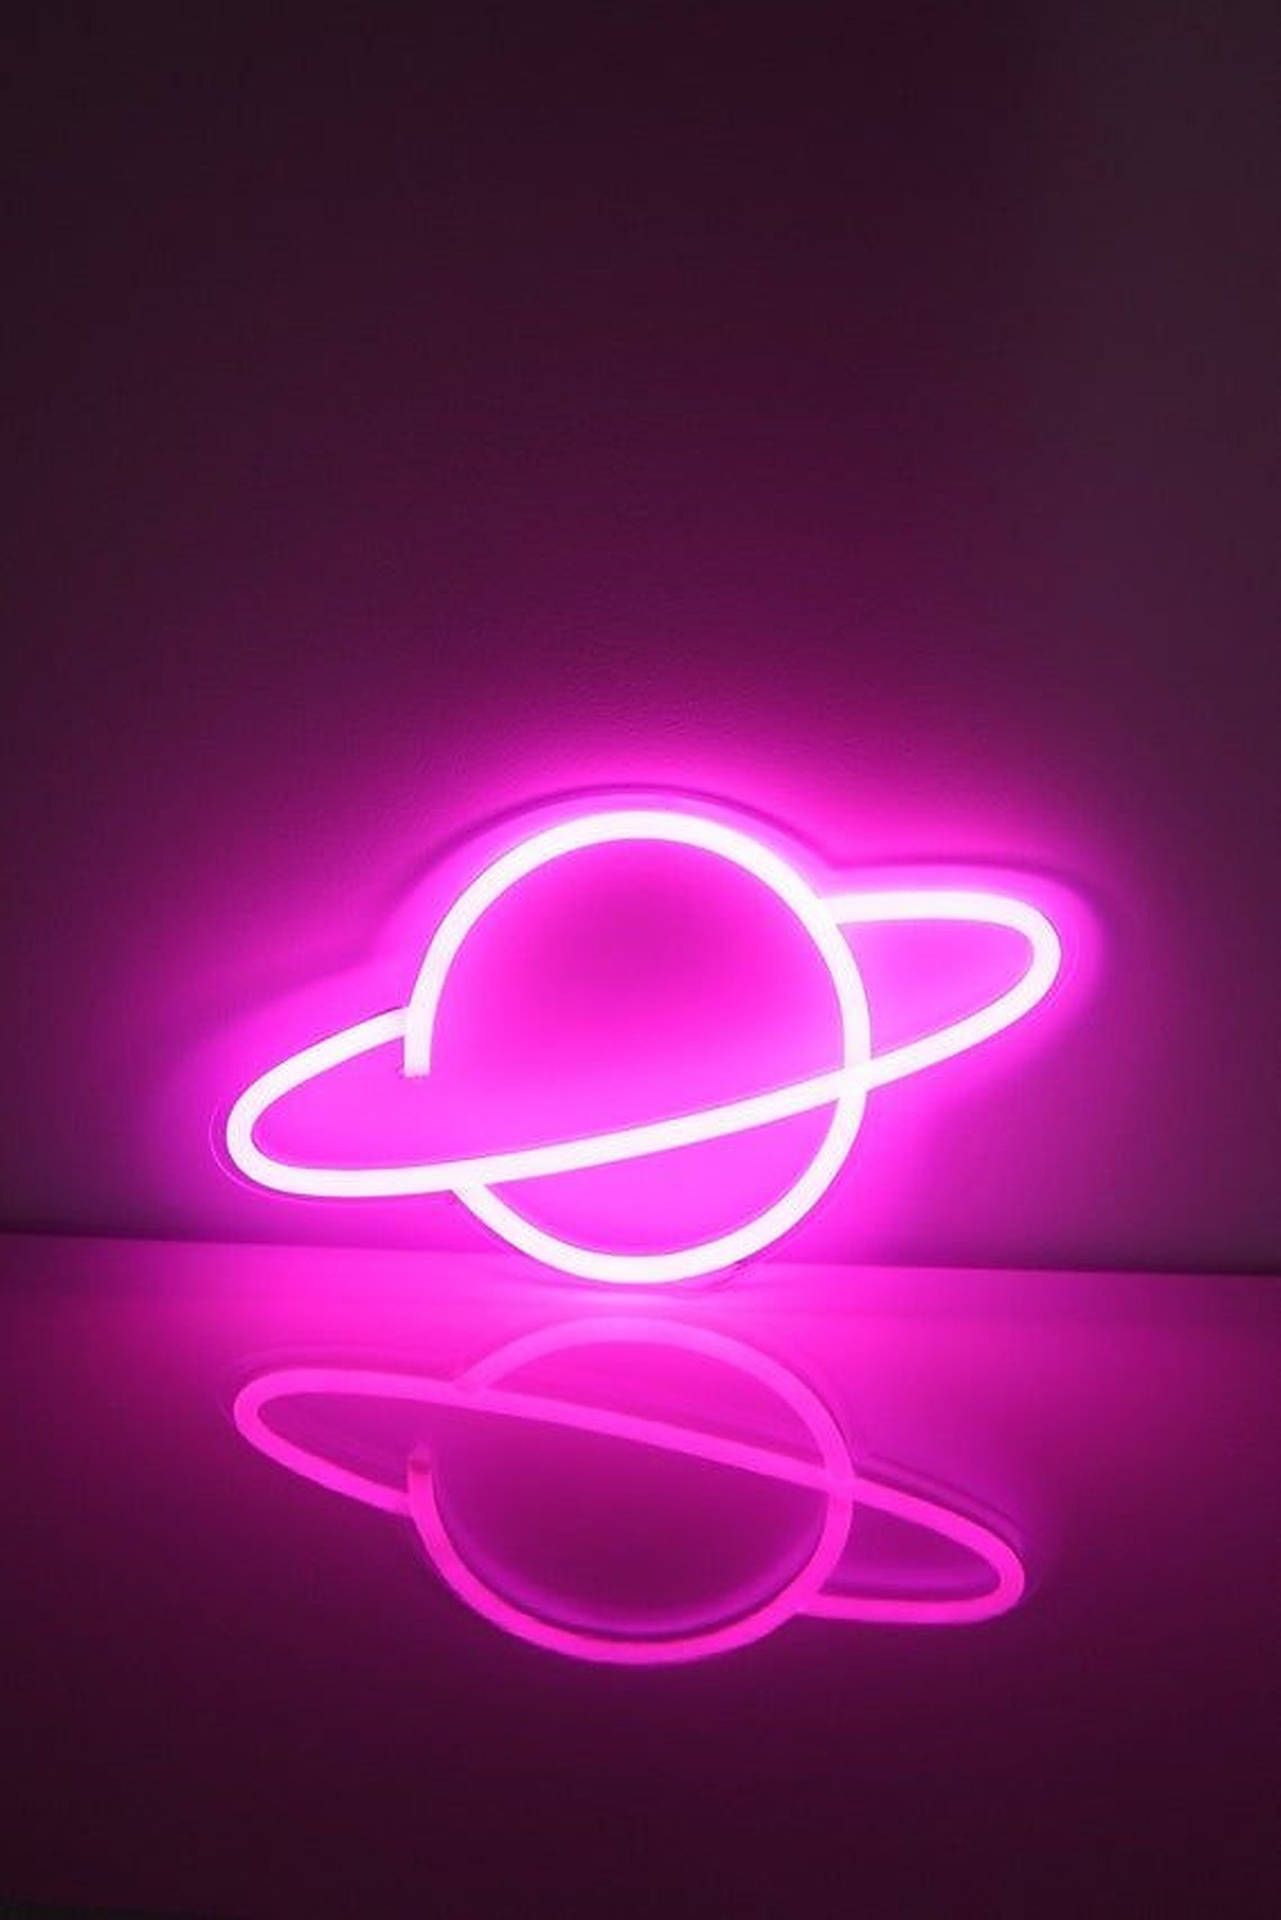  Led Hintergrundbild 1281x1920. Download Pink Saturn Led Light Wallpaper